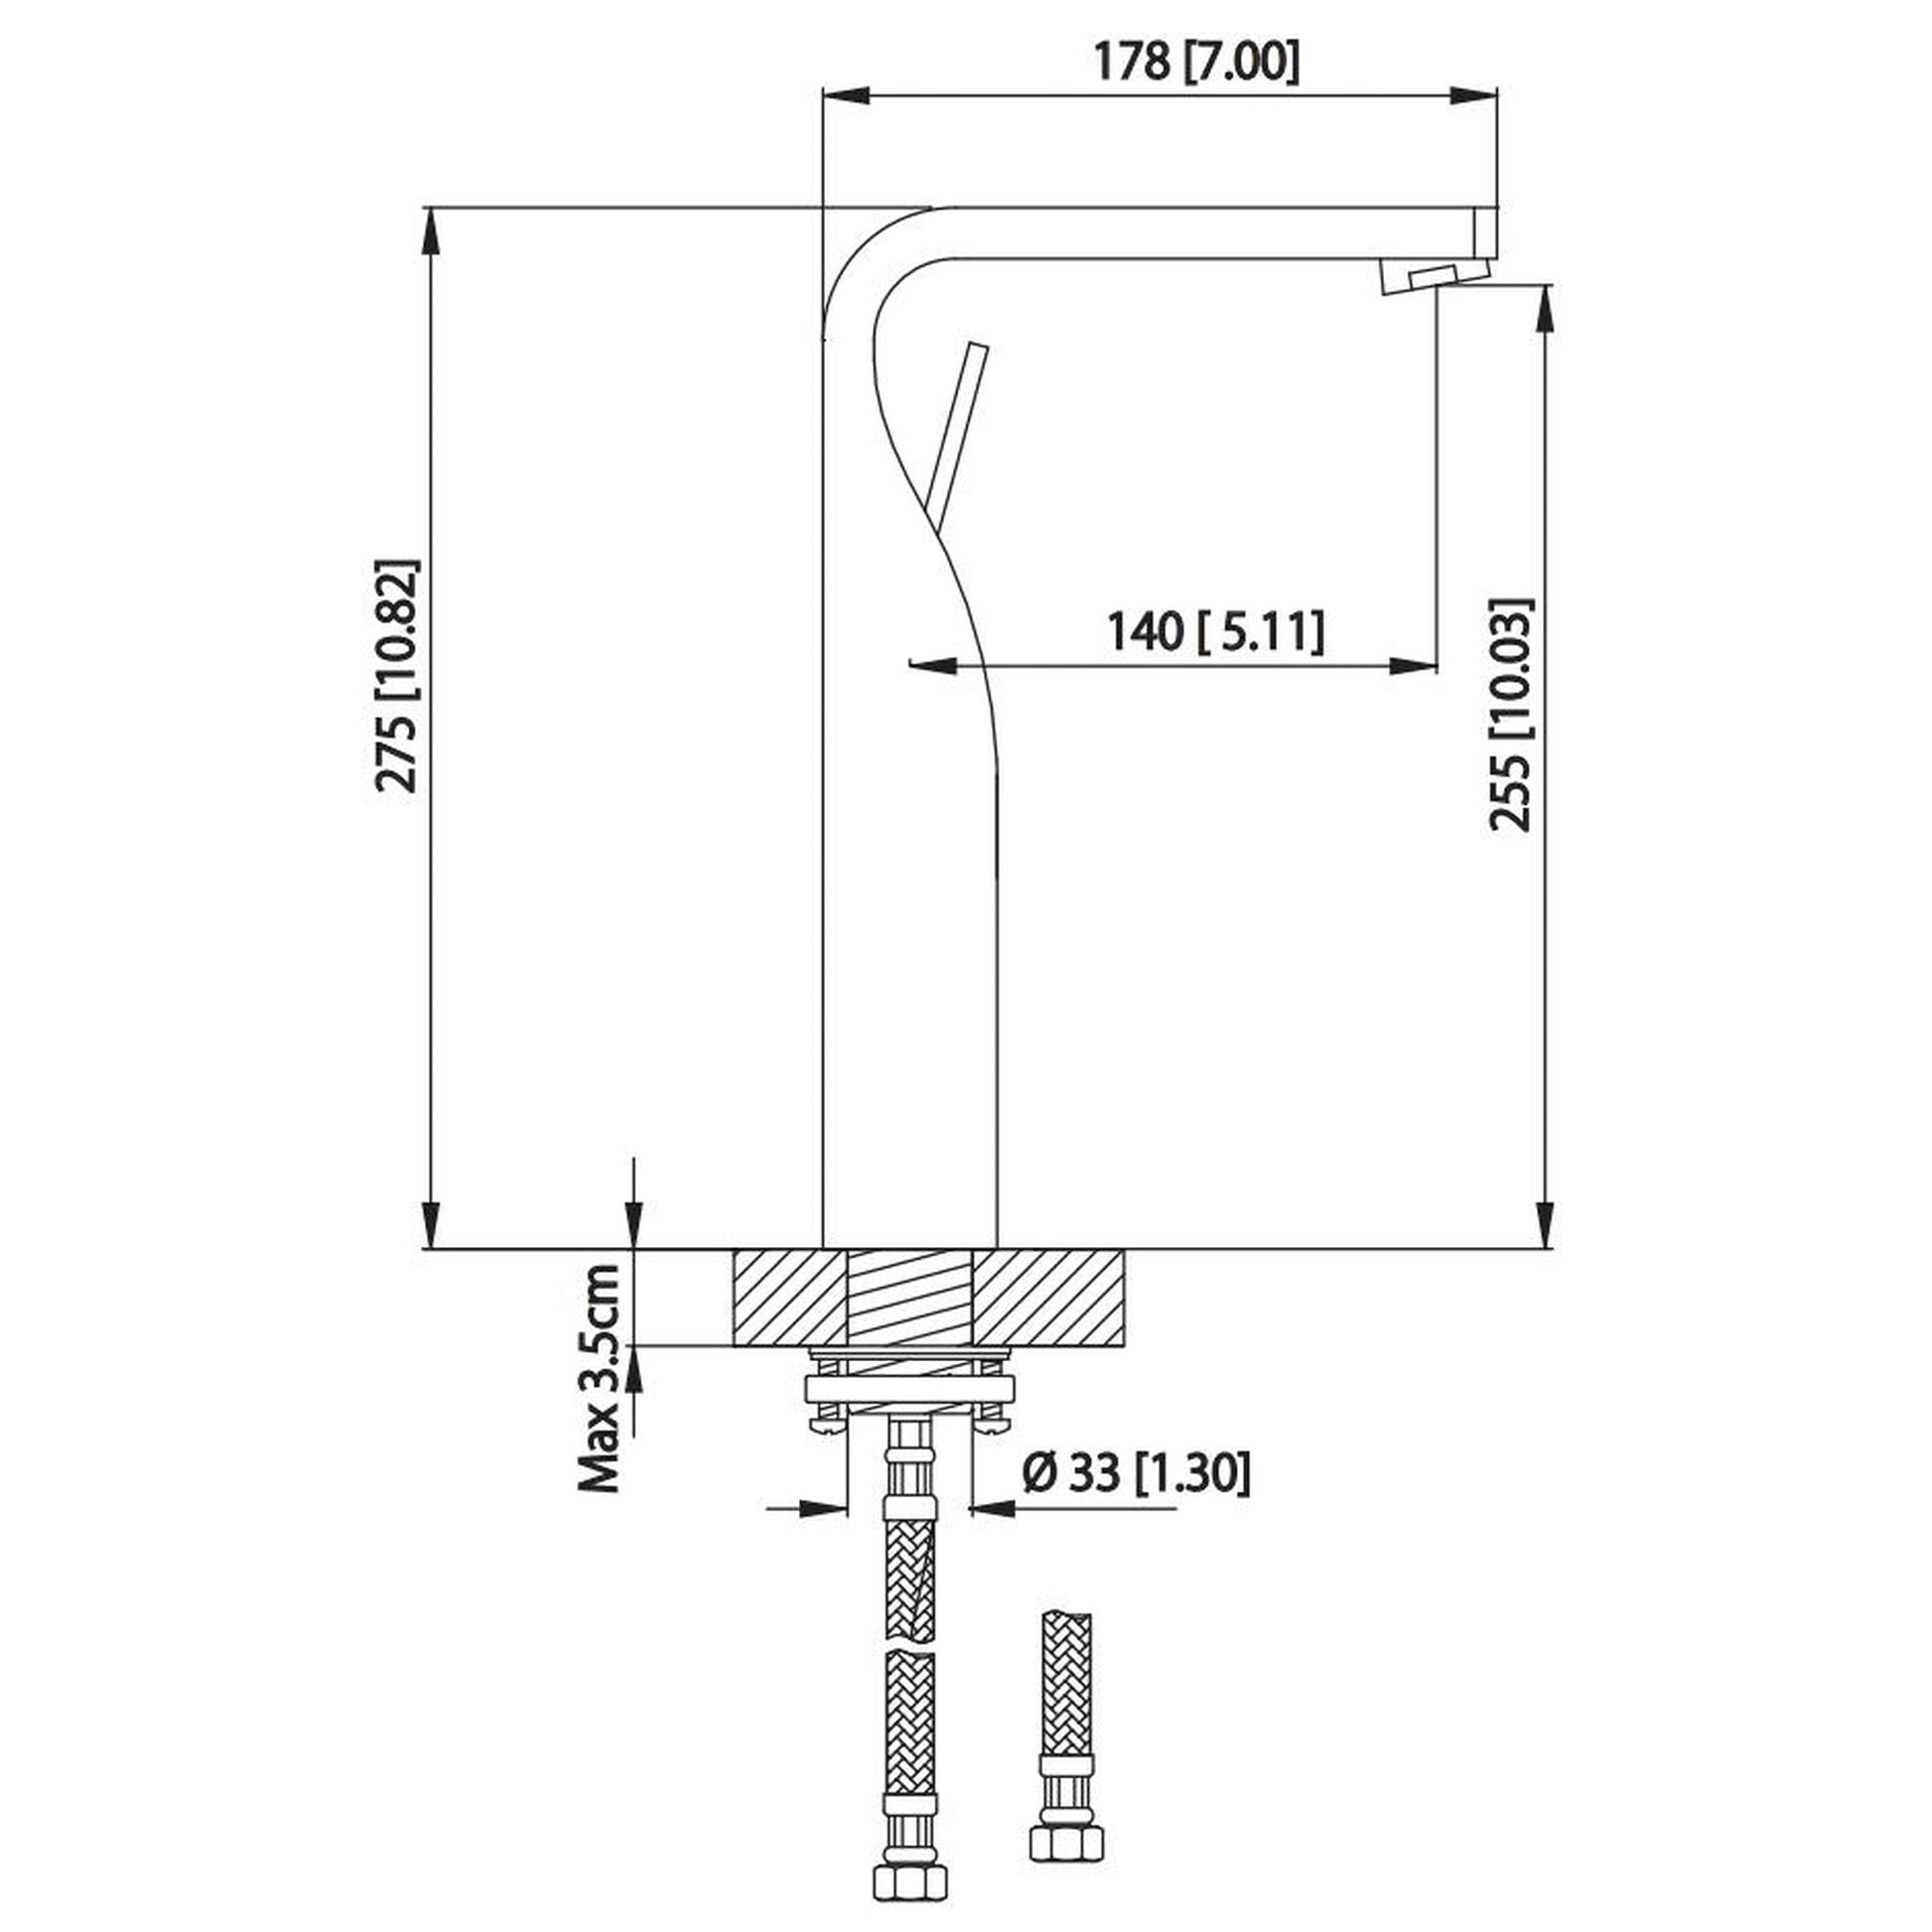 Isenberg Serie 260 11" Single-Hole Matte Black Deck-Mounted Vessel Bathroom Sink Faucet